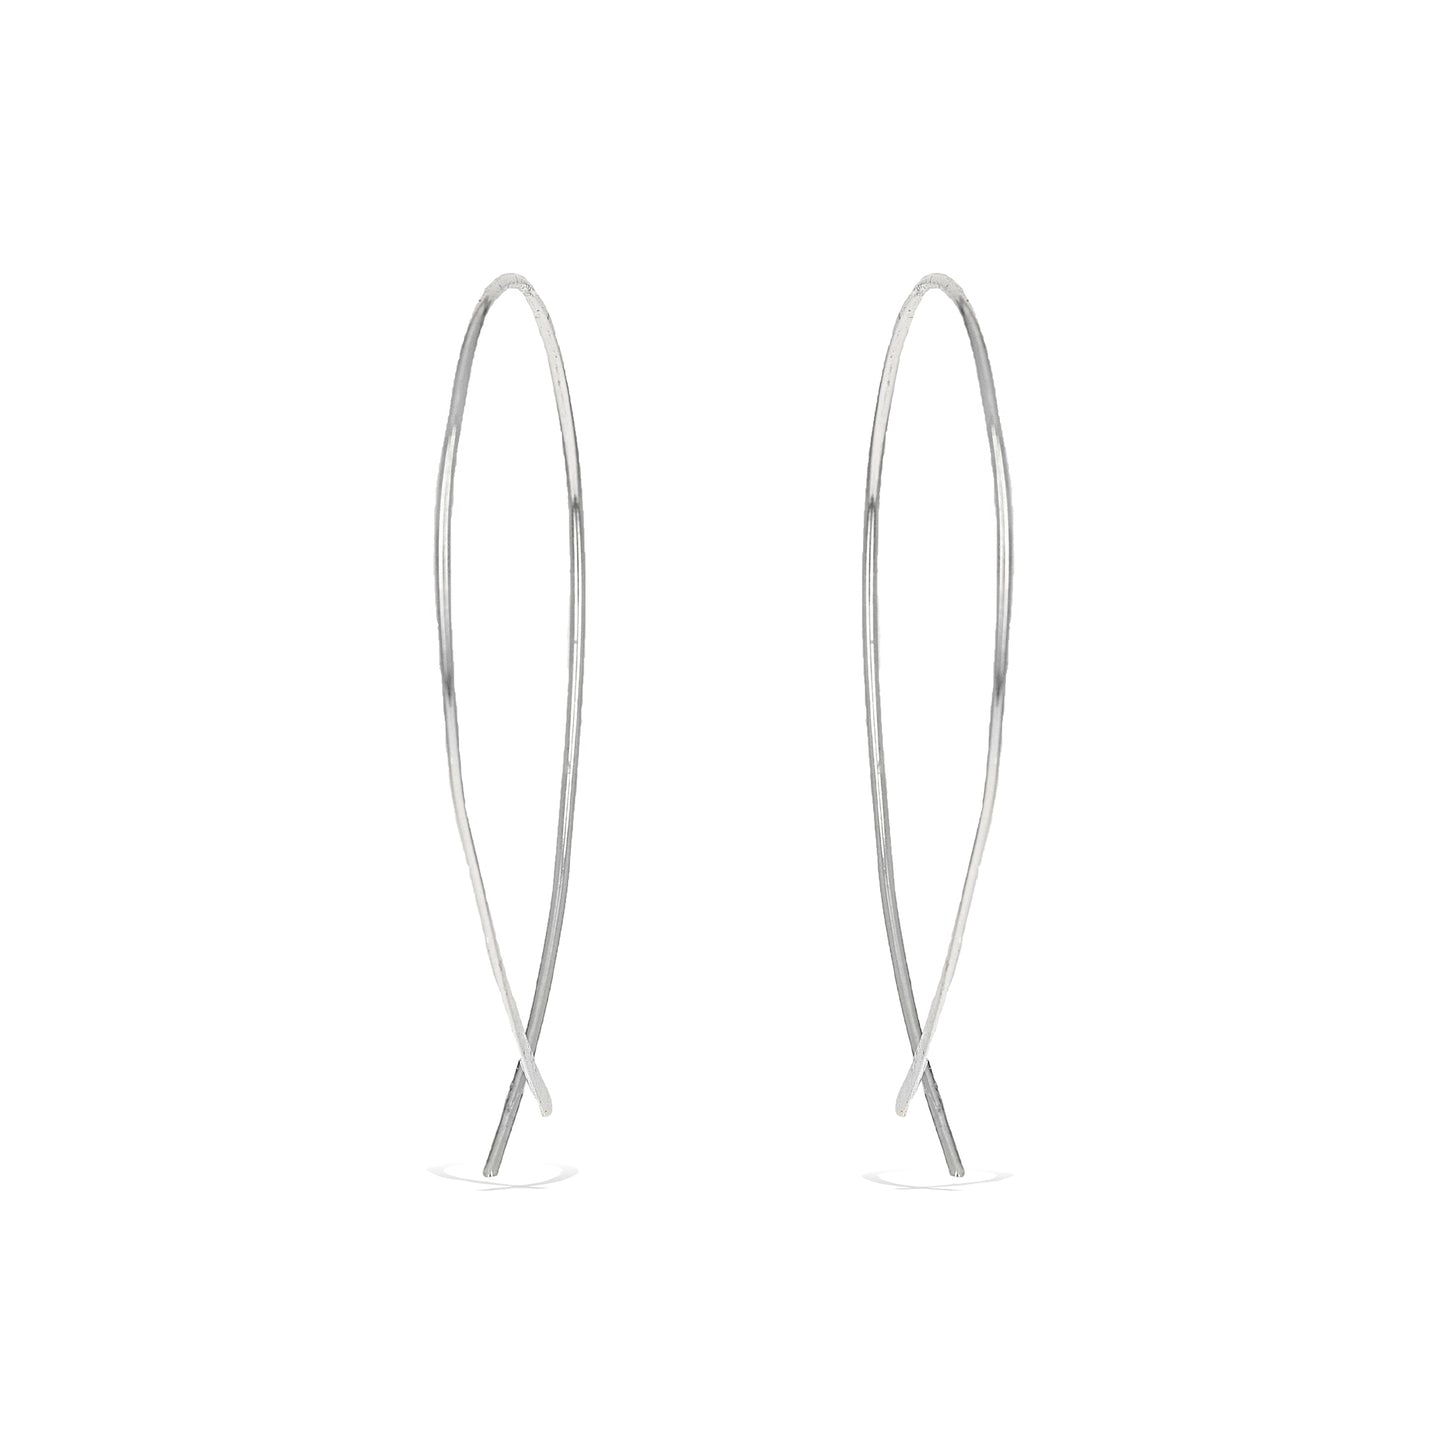 Thin Sterling Silver Criss Cross Threader Hoop Earrings 